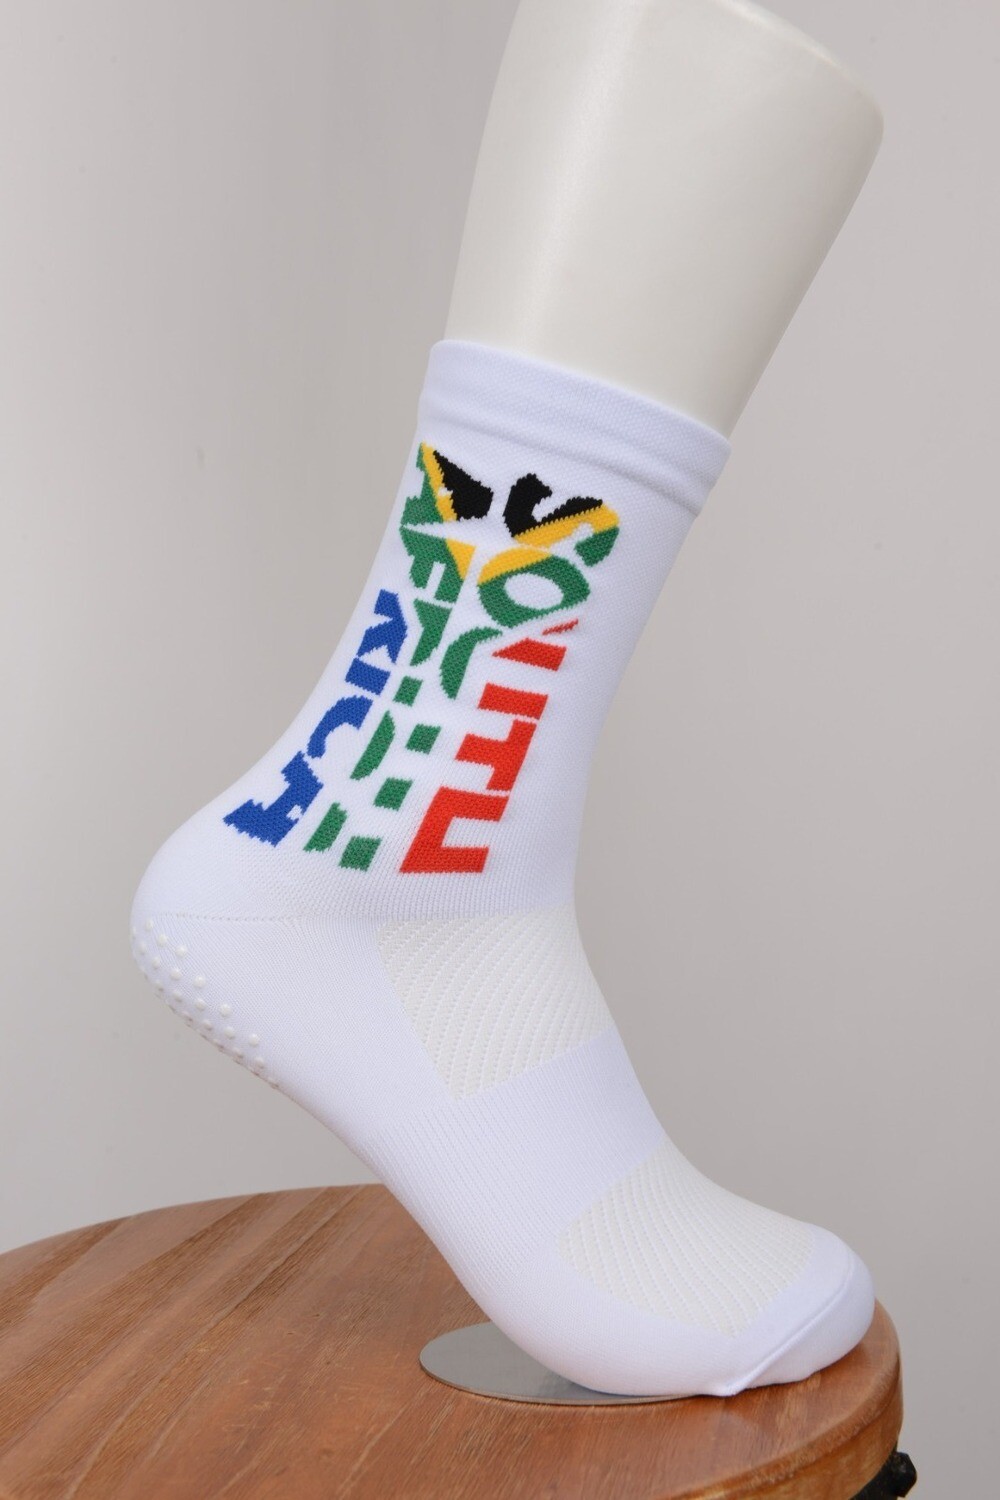 South Africa Socks